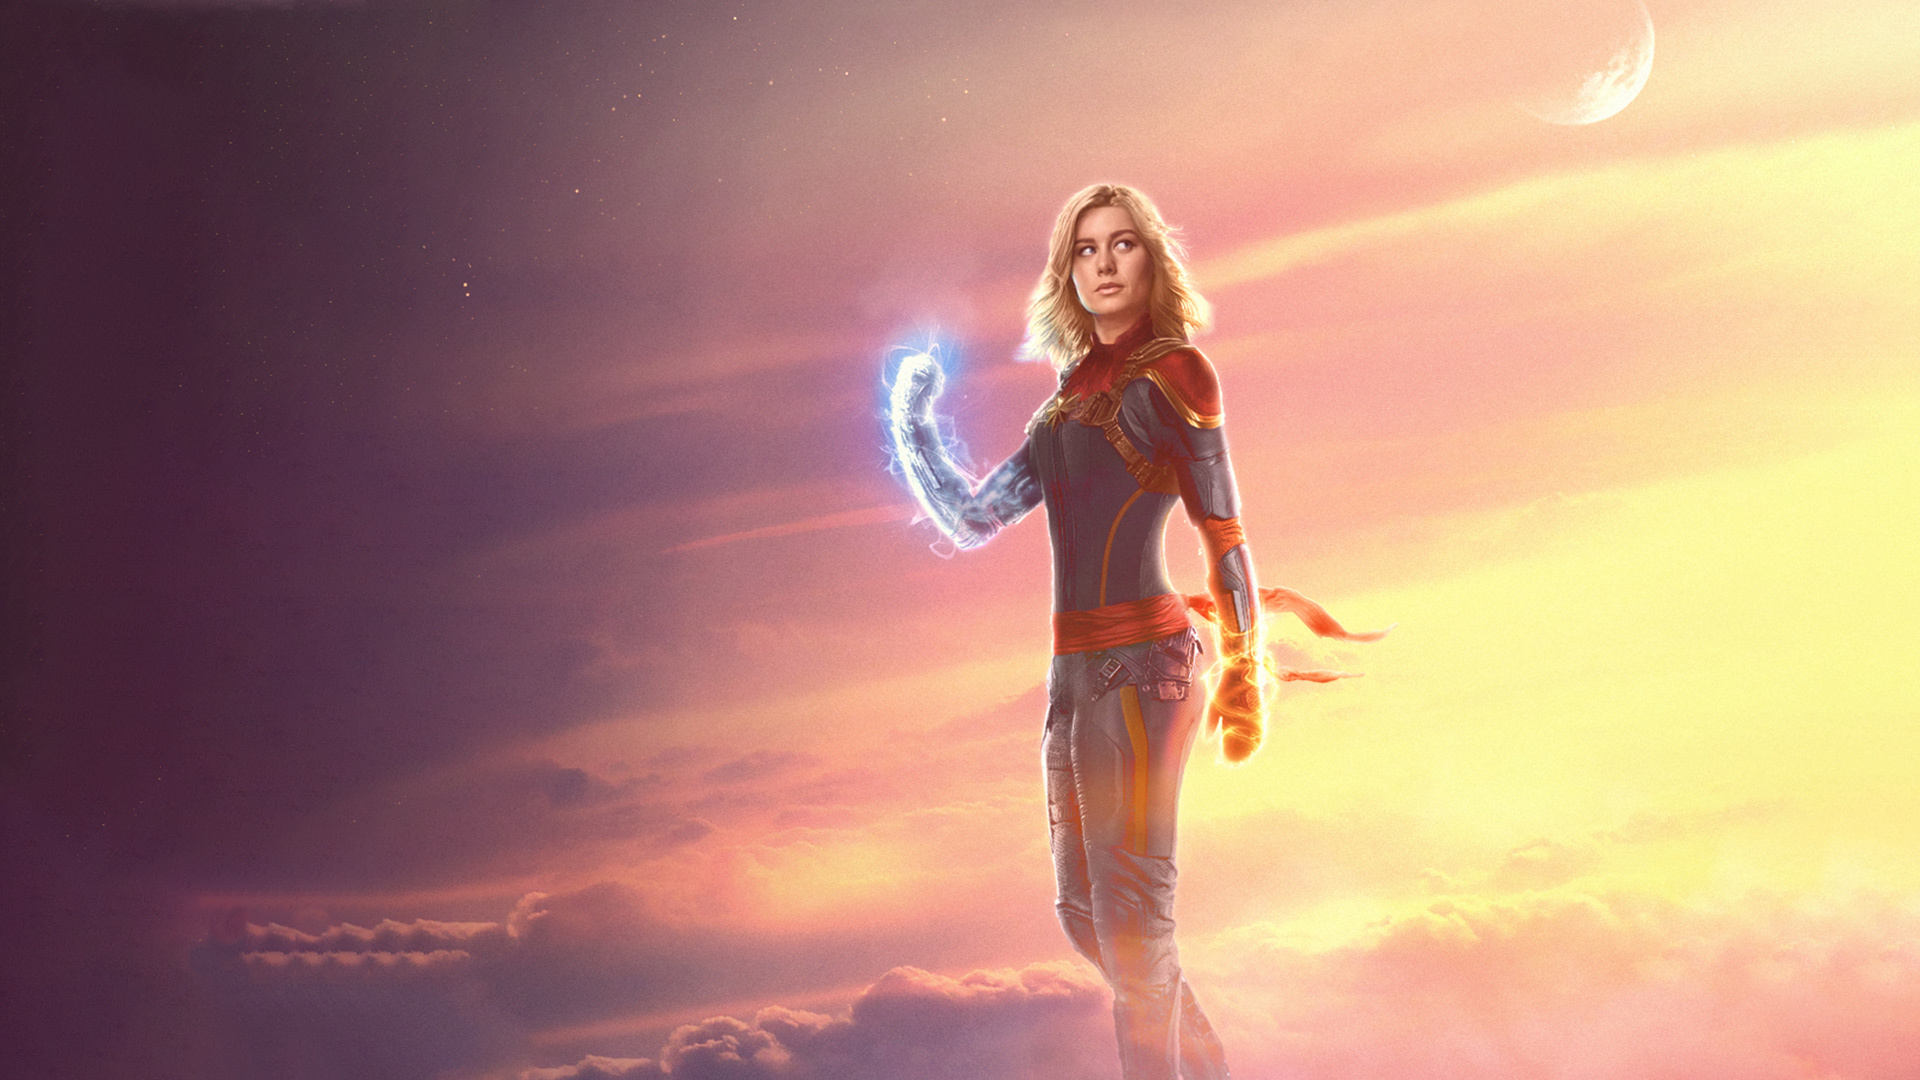 Movie Captain Marvel HD Wallpaper | Background Image